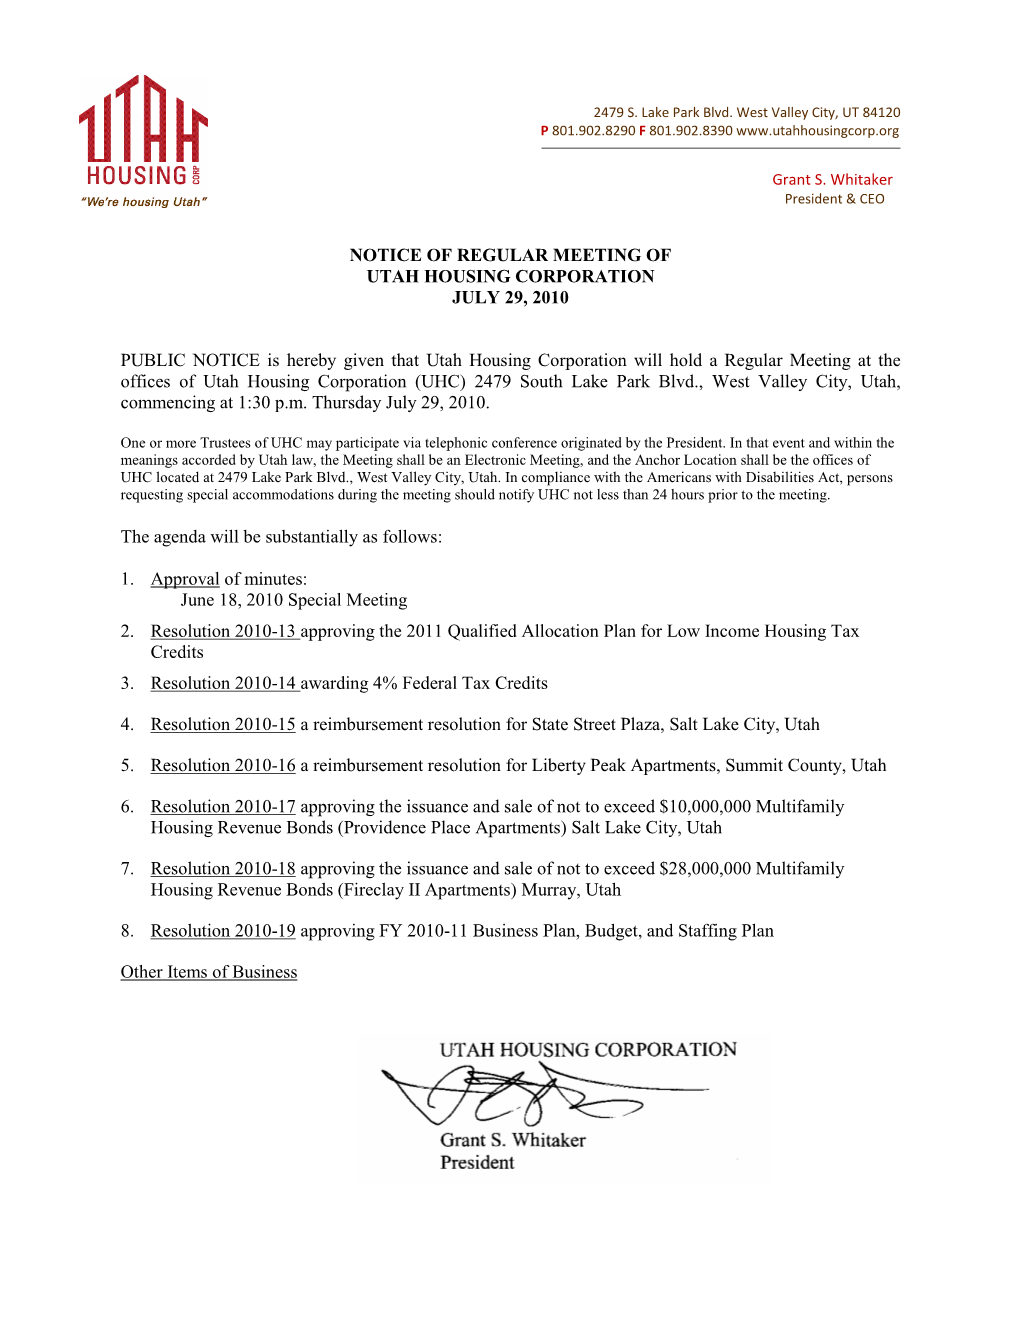 Notice of Regular Meeting of Utah Housing Corporation July 29, 2010